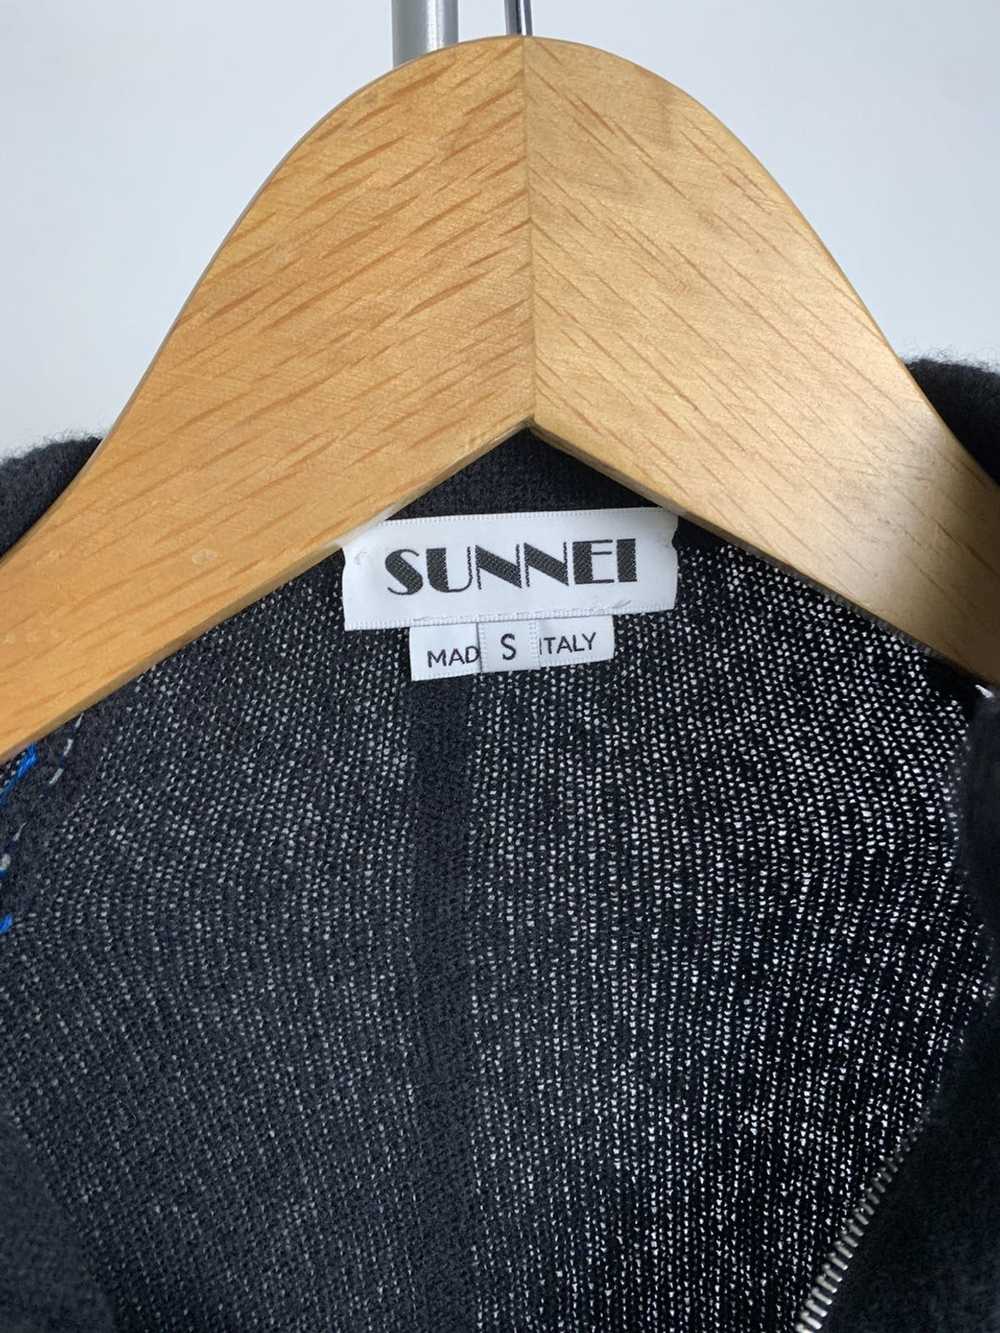 Sunnei Sunnei Cashmere Zip Sweater - image 5